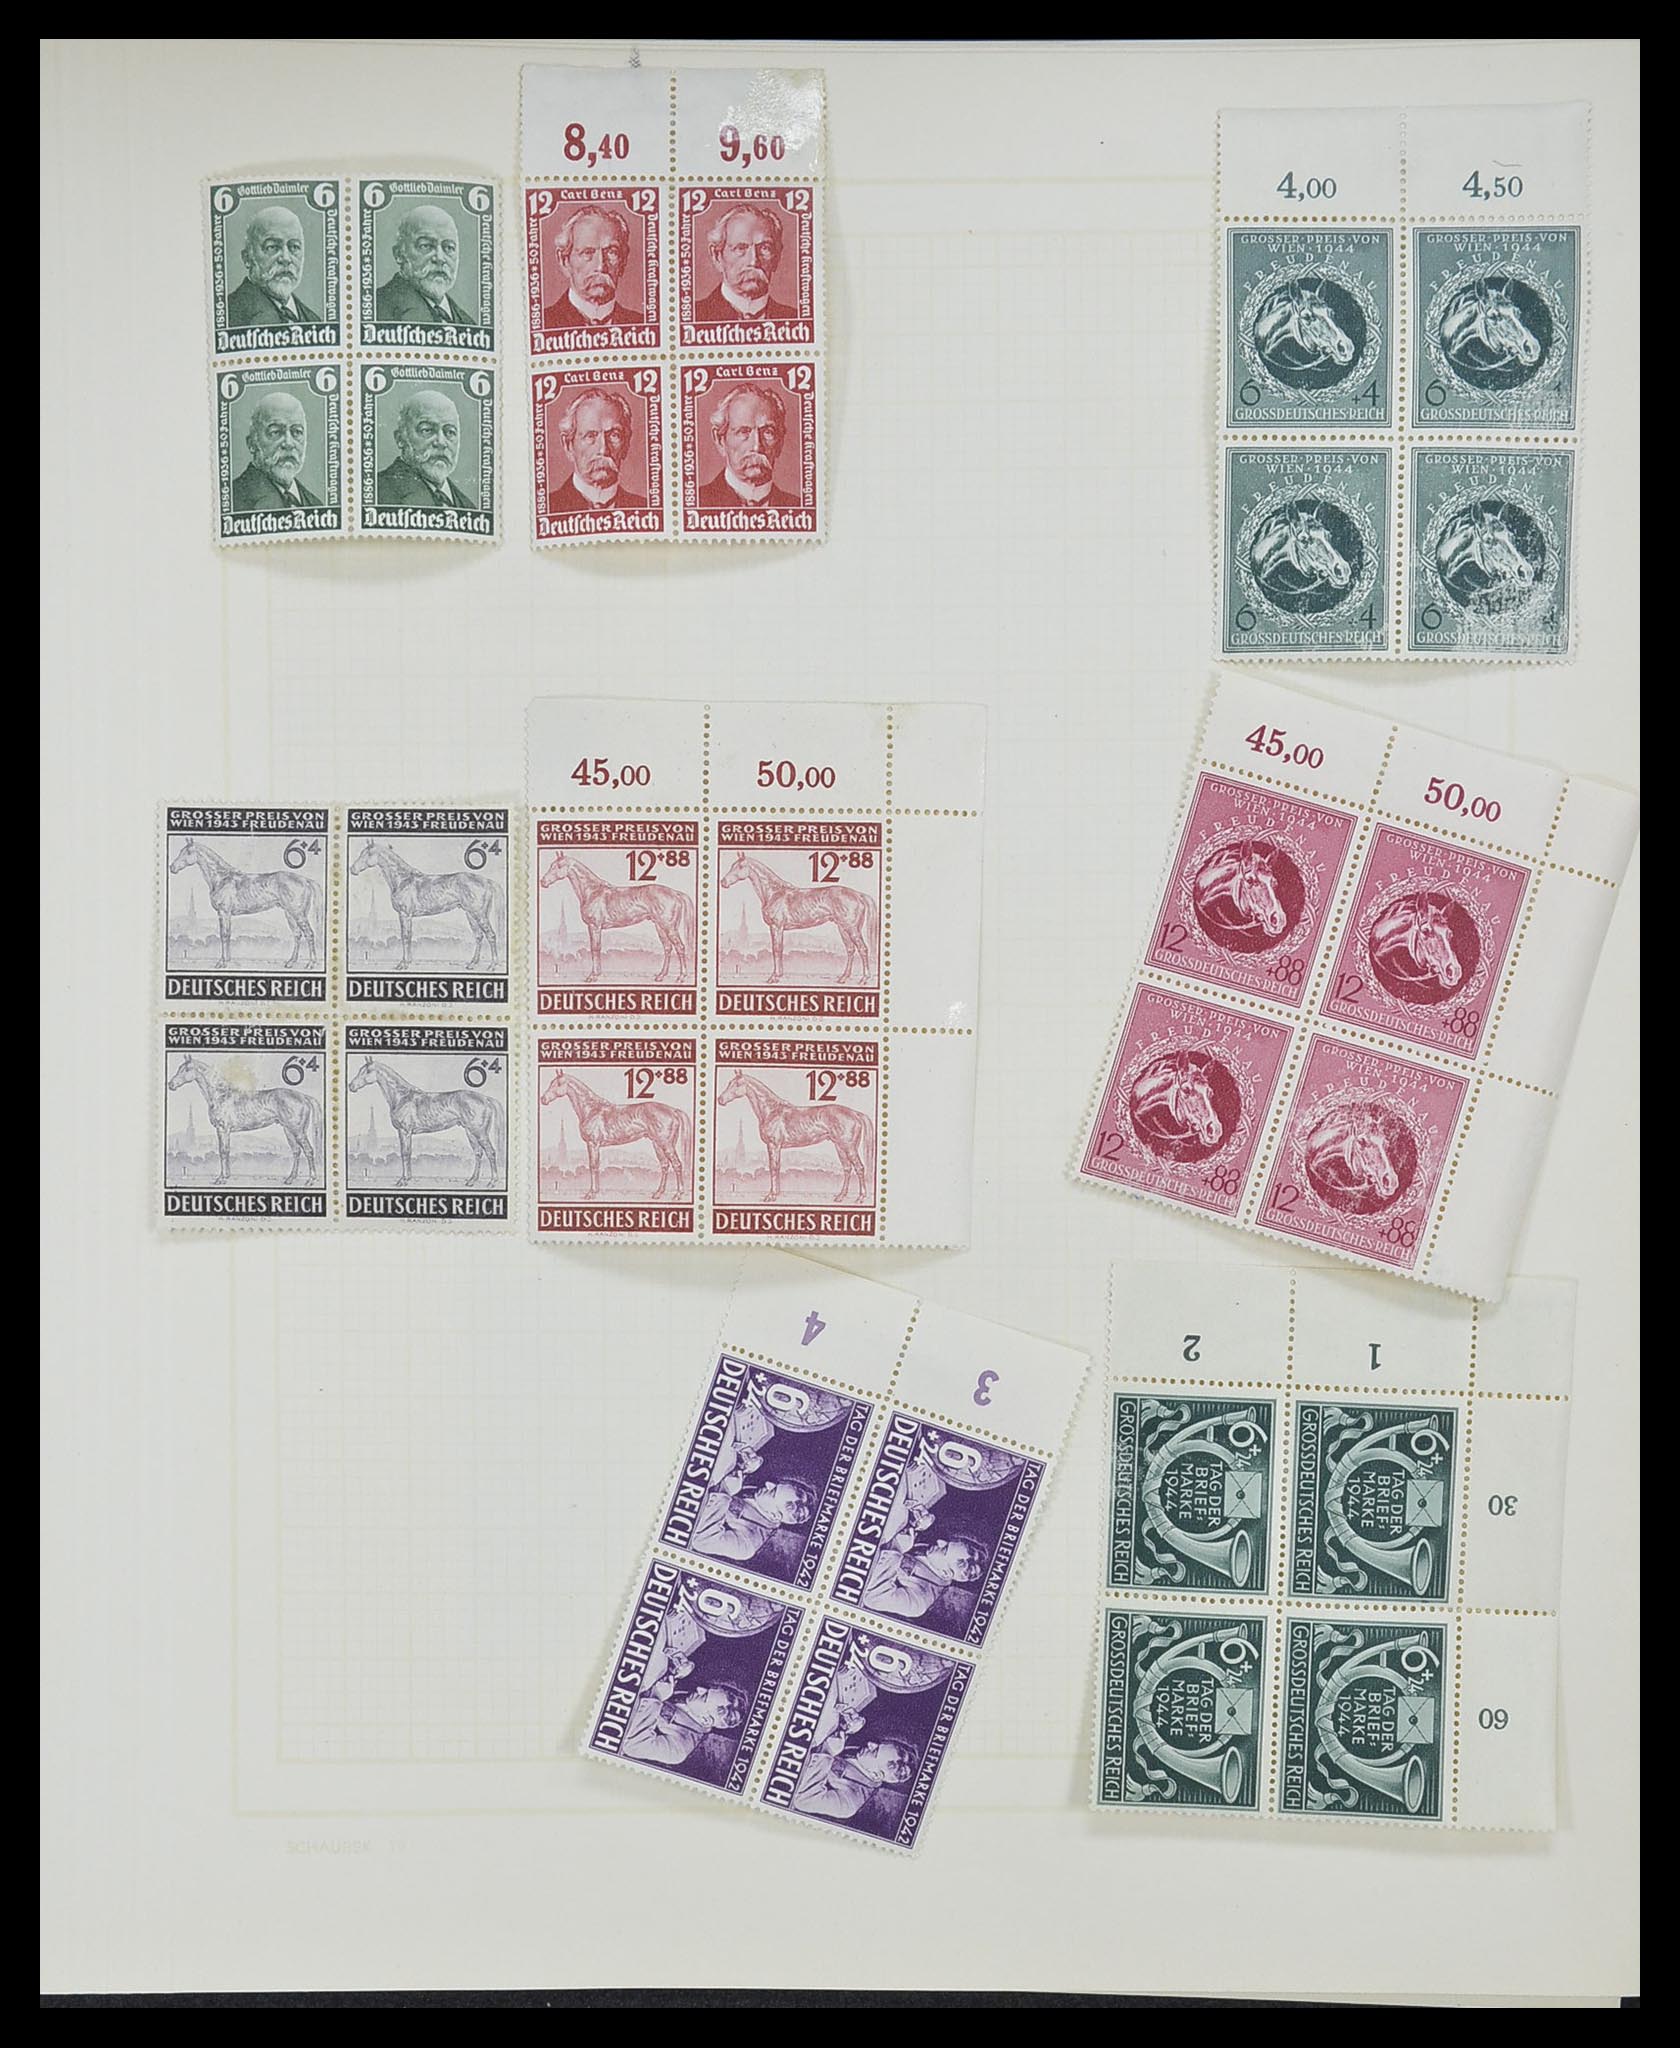 33215 066 - Stamp collection 33215 German Reich 1920-1945.